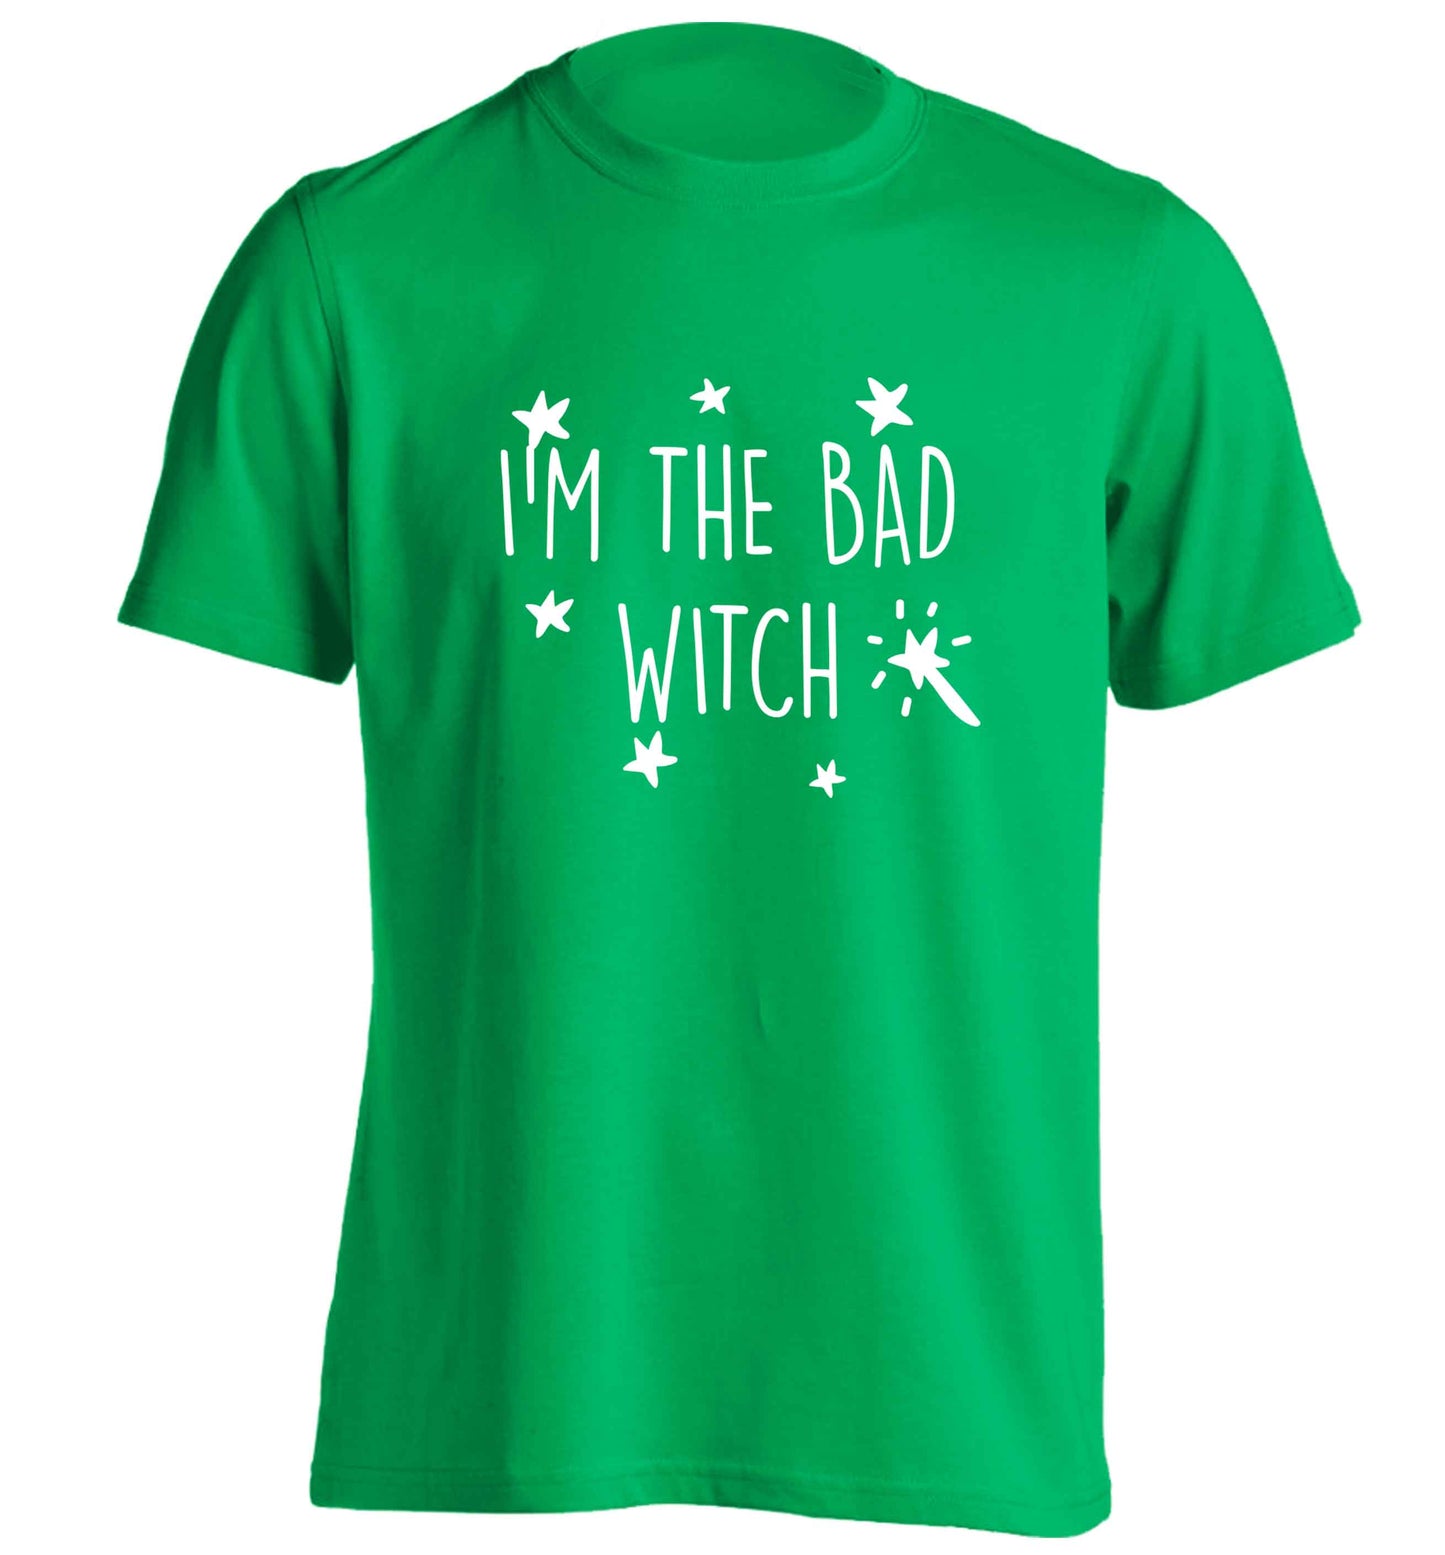 Bad witch adults unisex green Tshirt 2XL